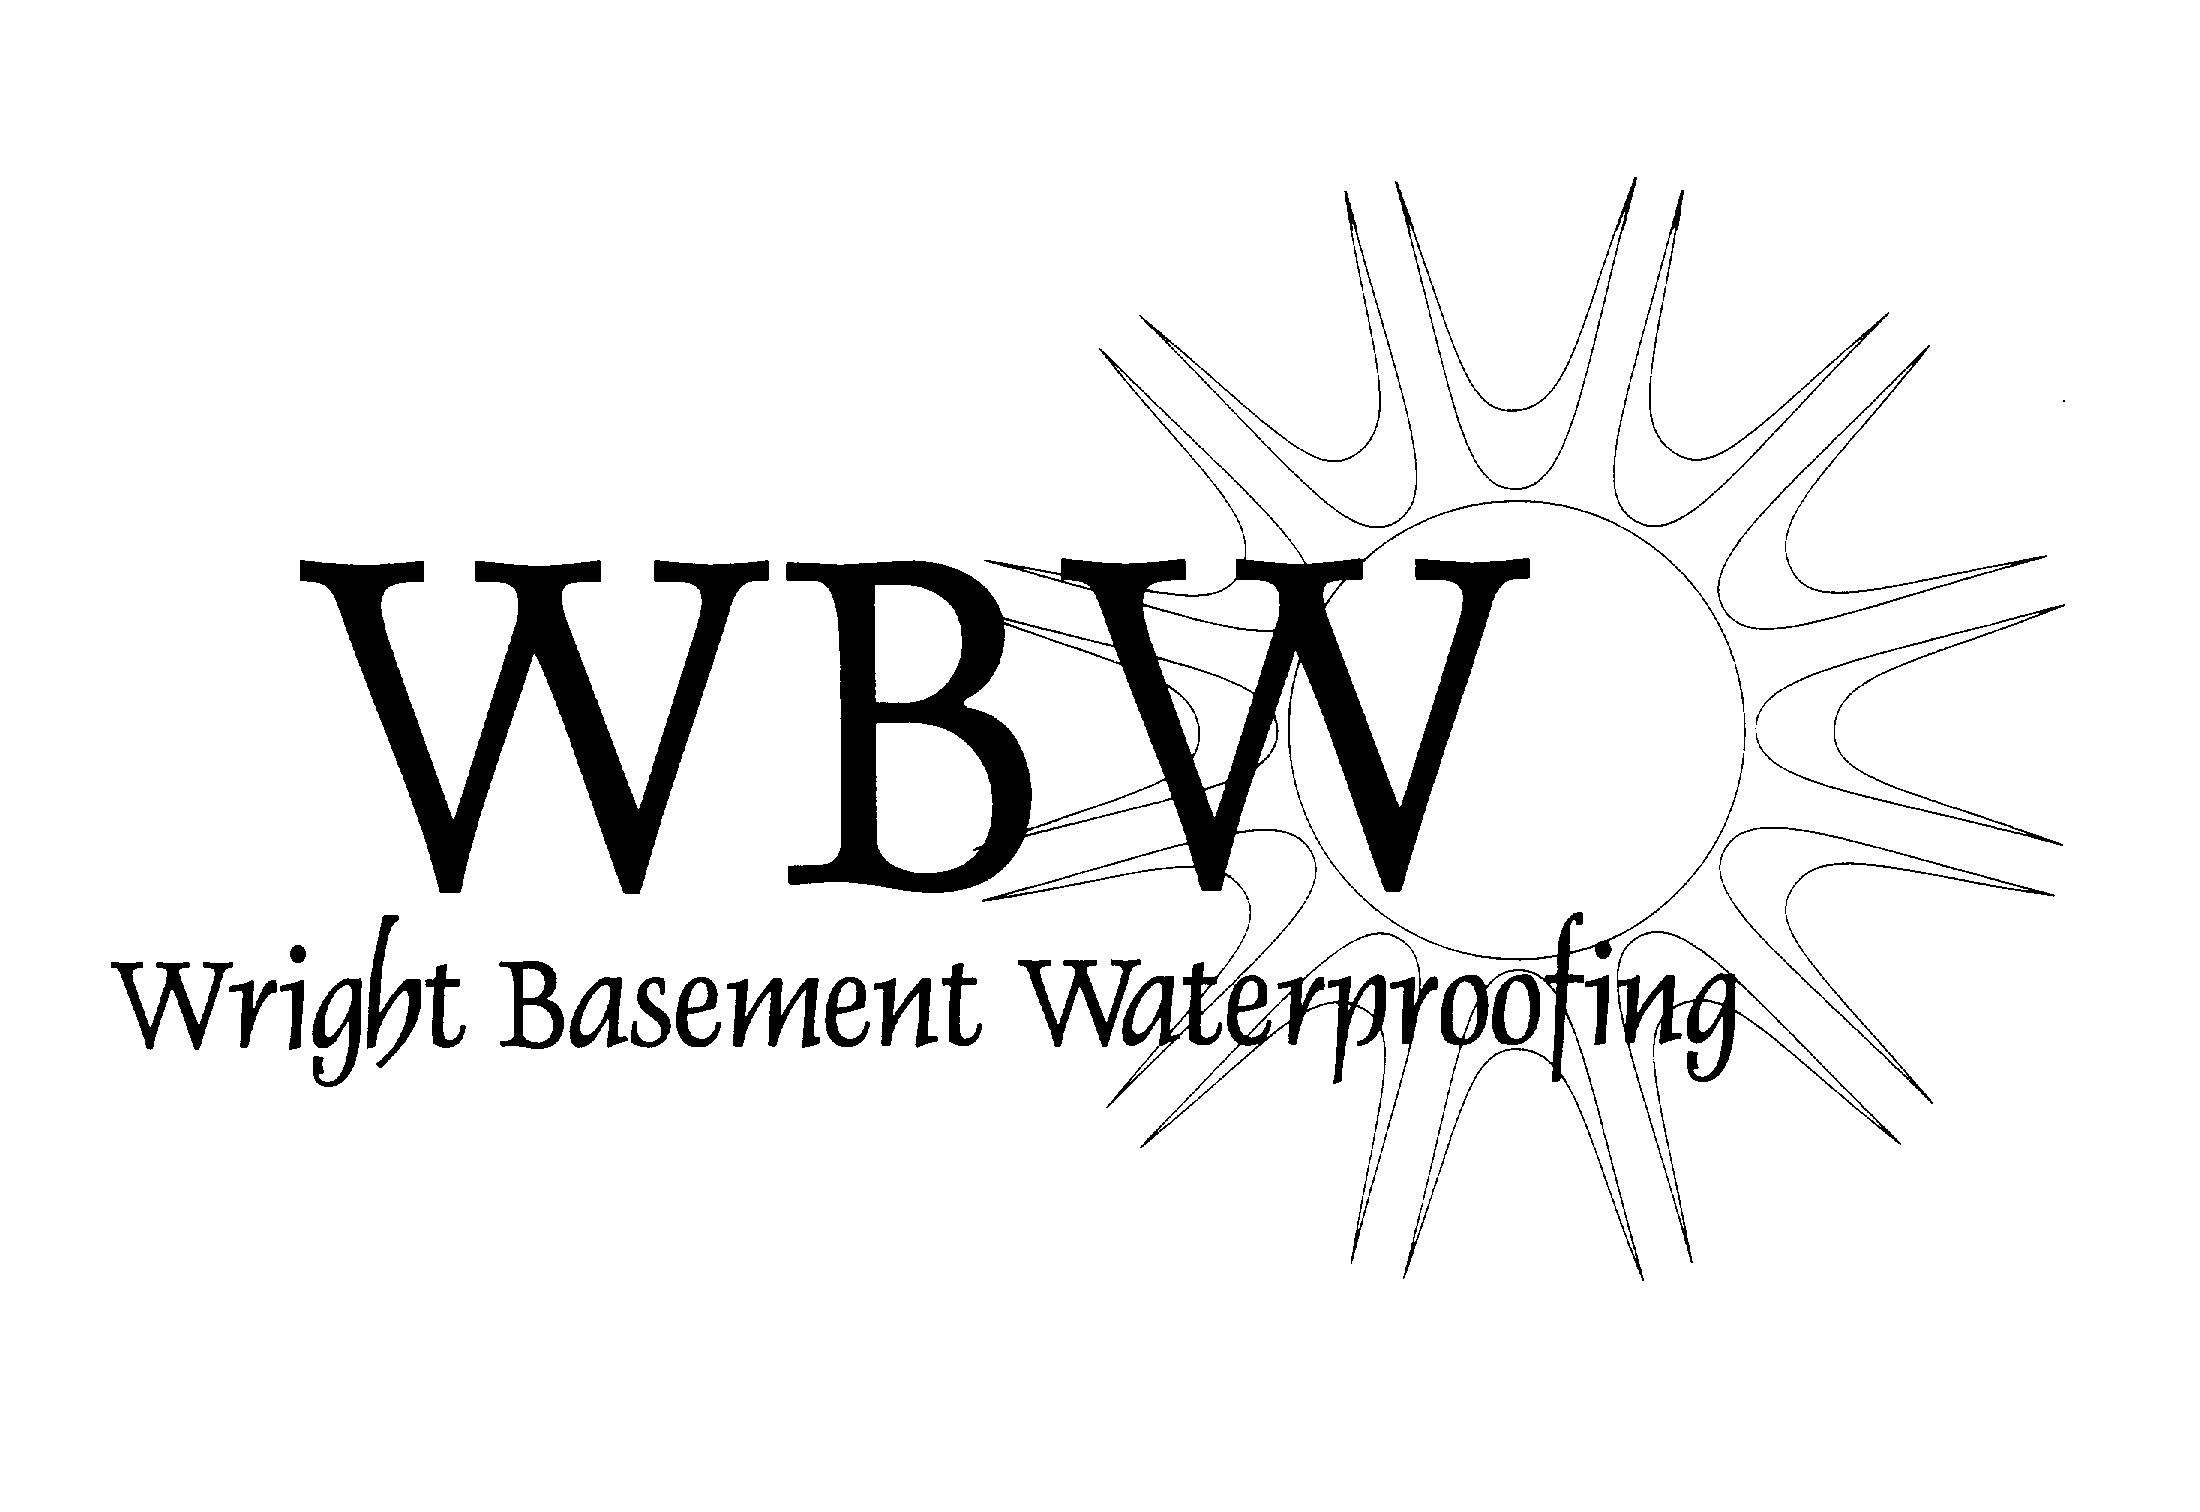  WBW WRIGHT BASEMENT WATERPROOFING